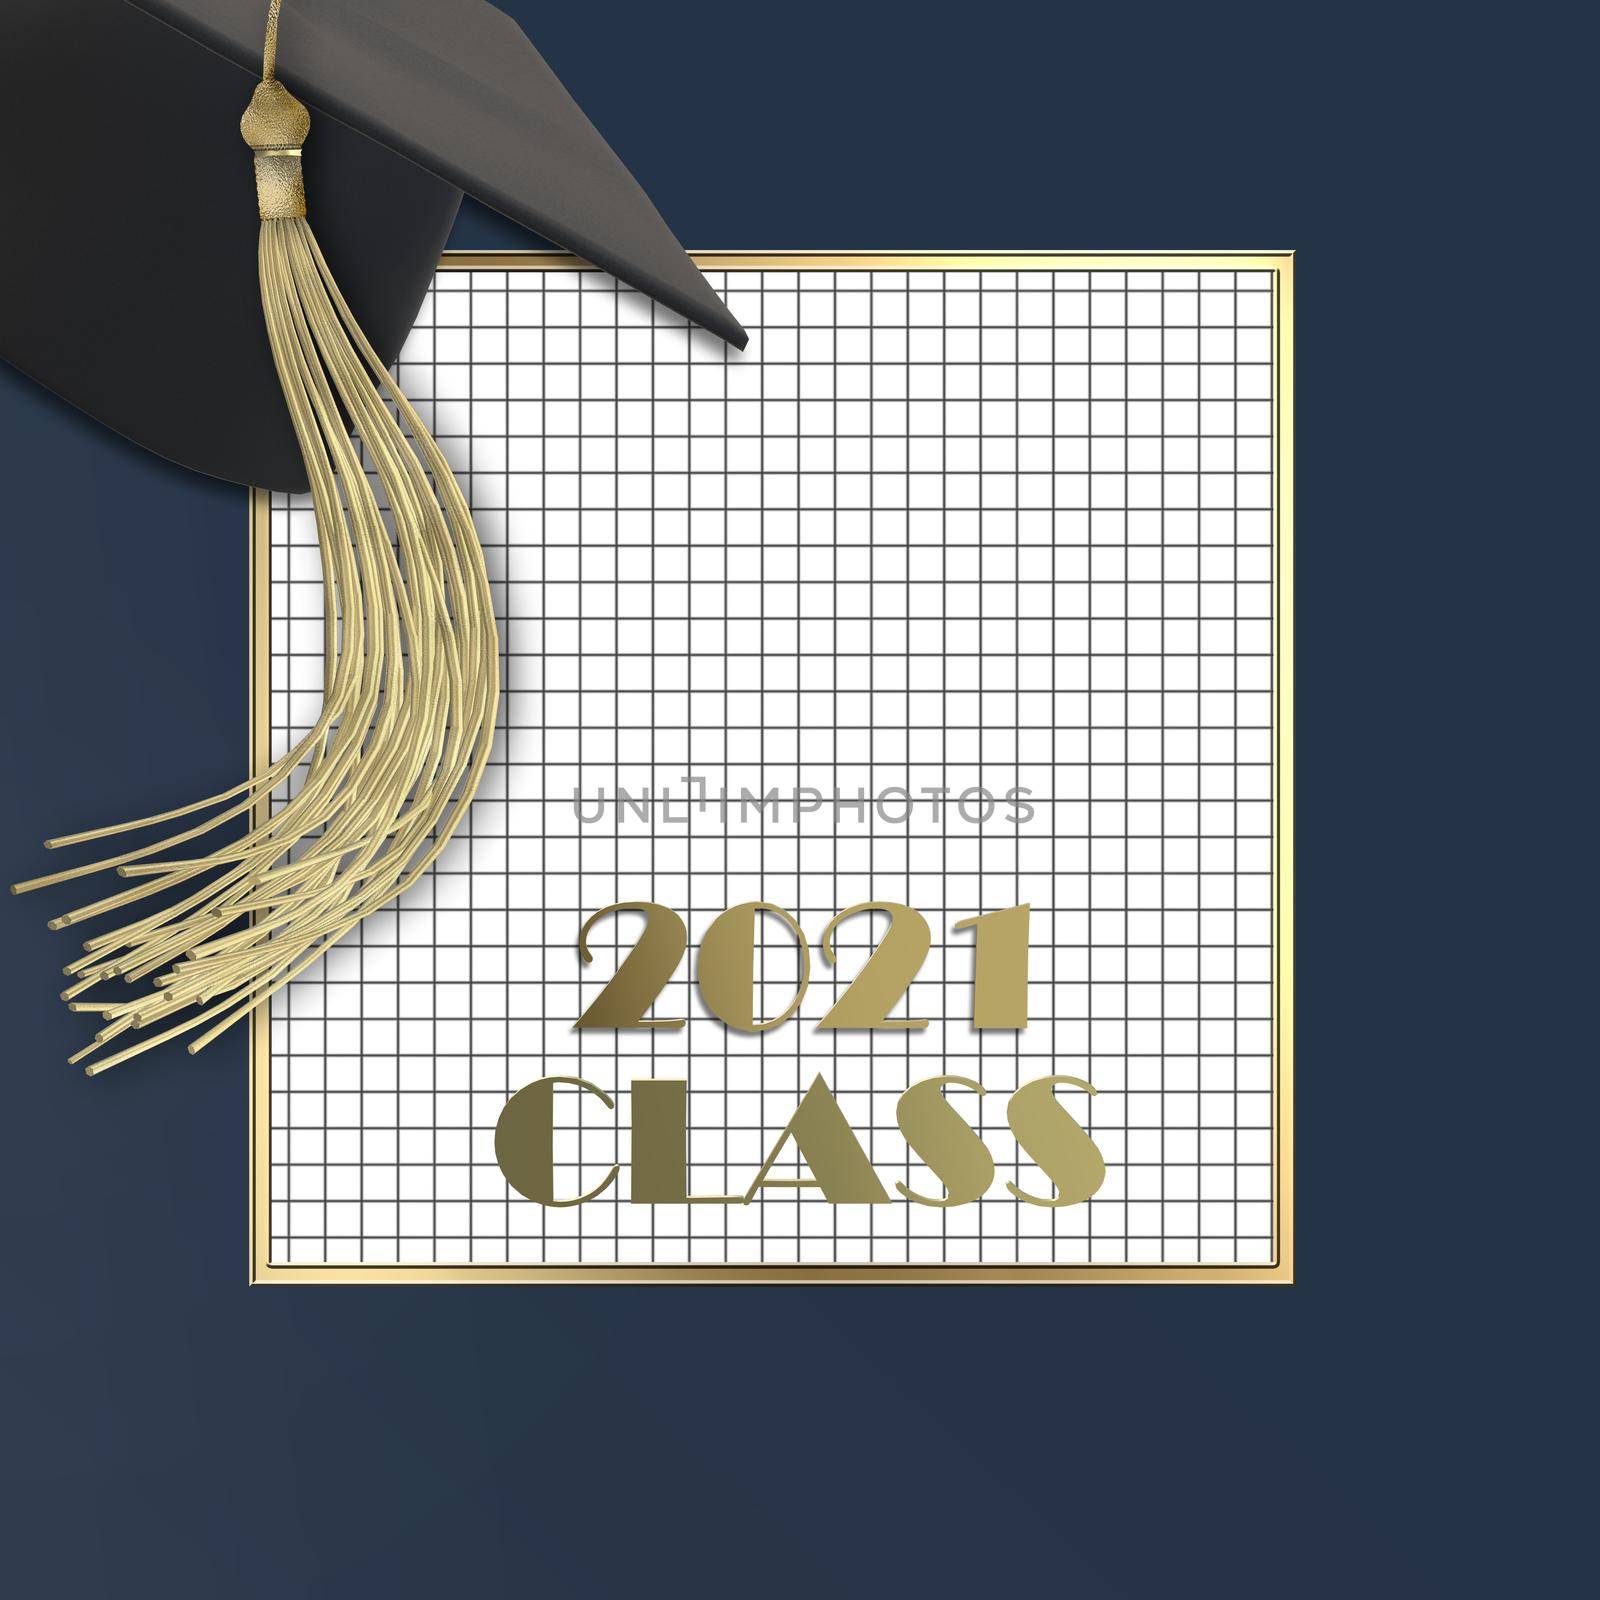 Graduation class 2021 design by NelliPolk